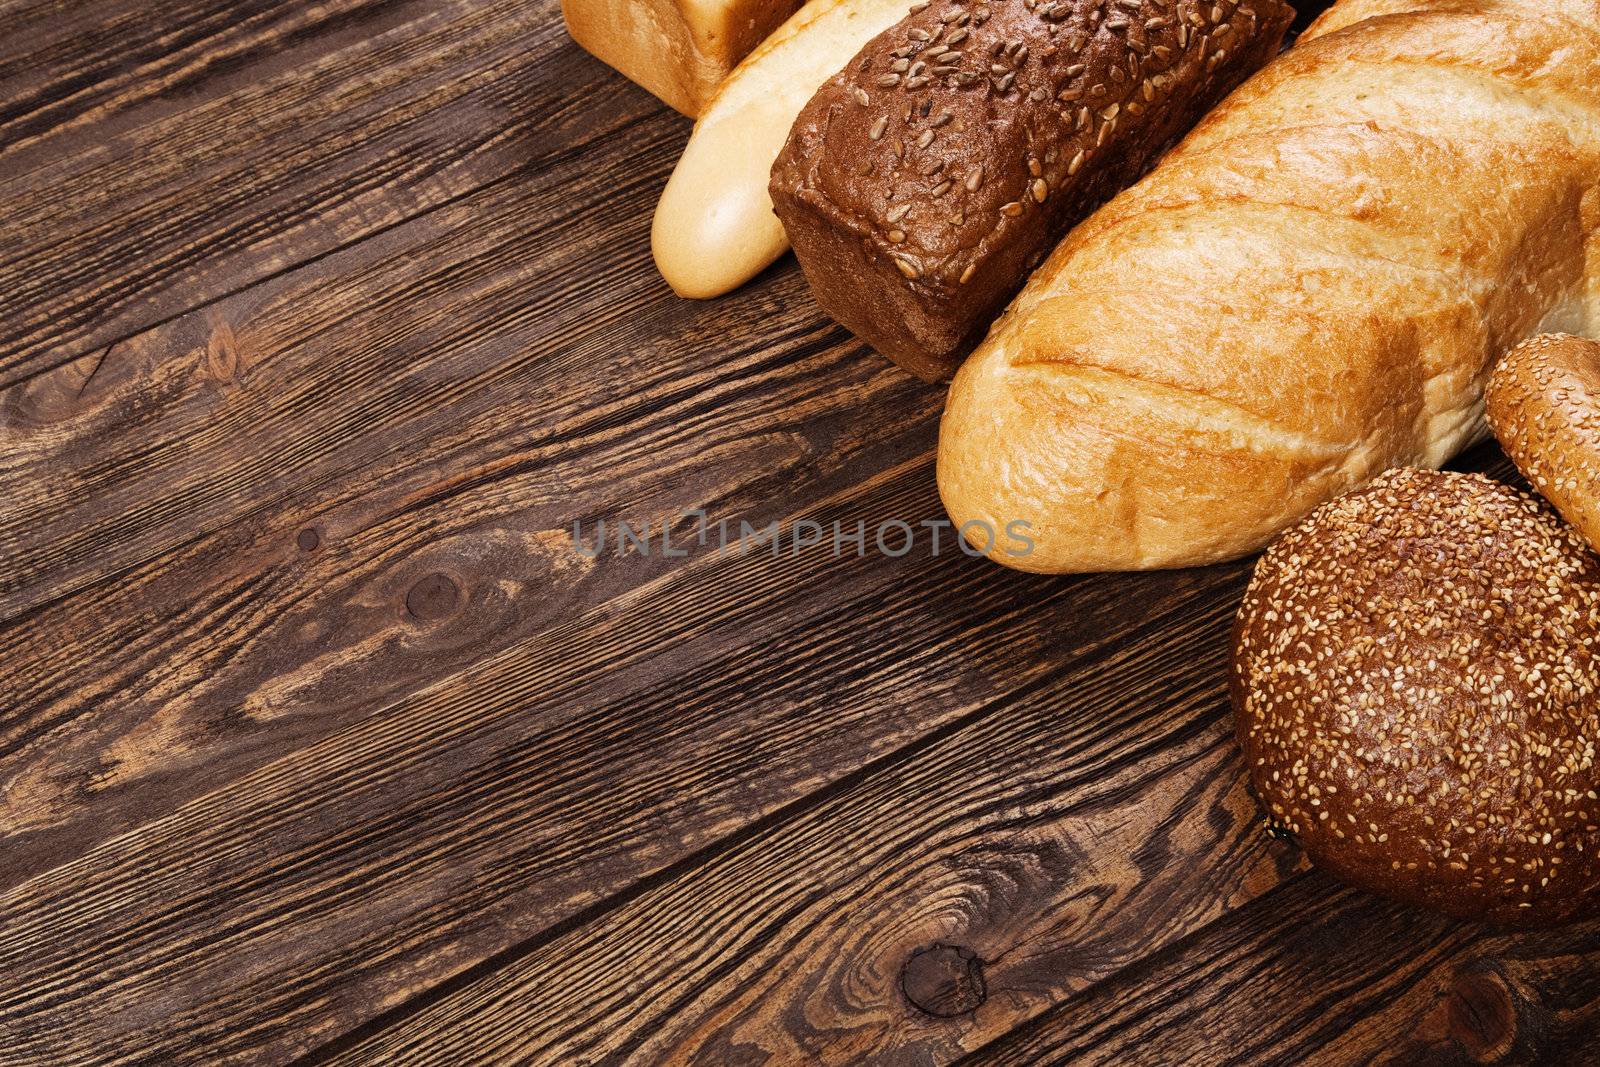 Bread assortment by Gdolgikh